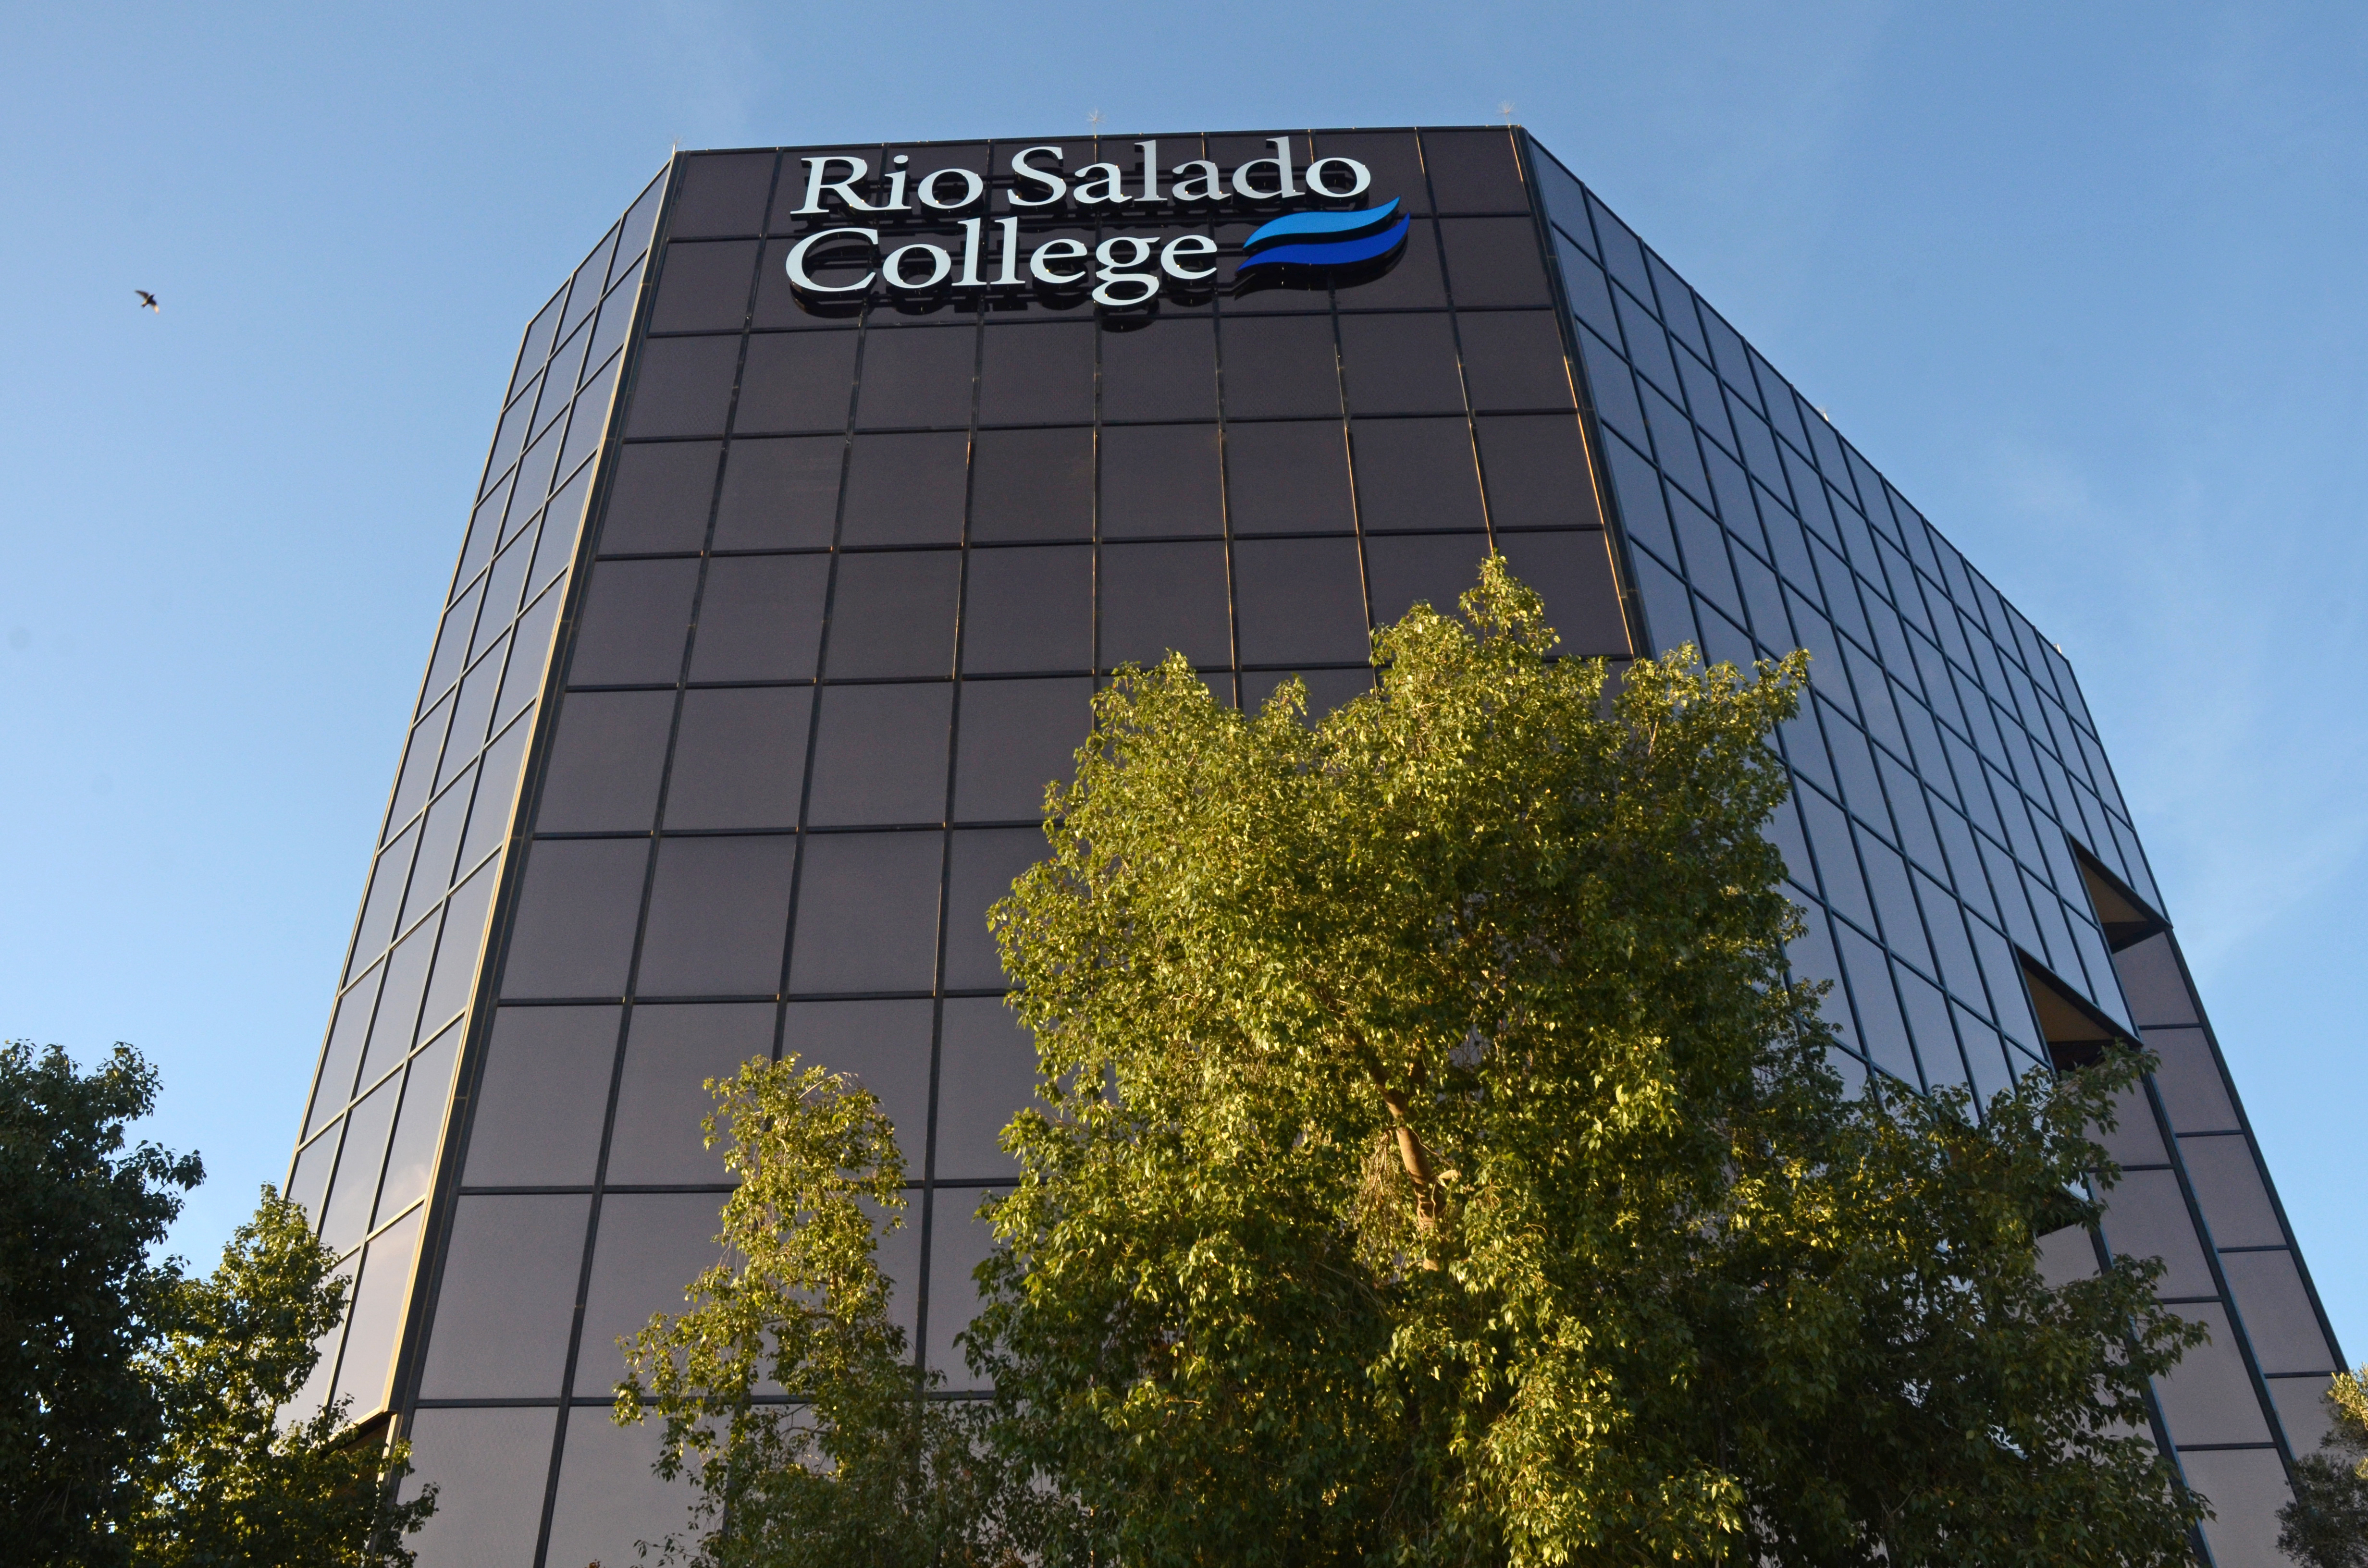 Large skyscraper with Rio Salado College logo